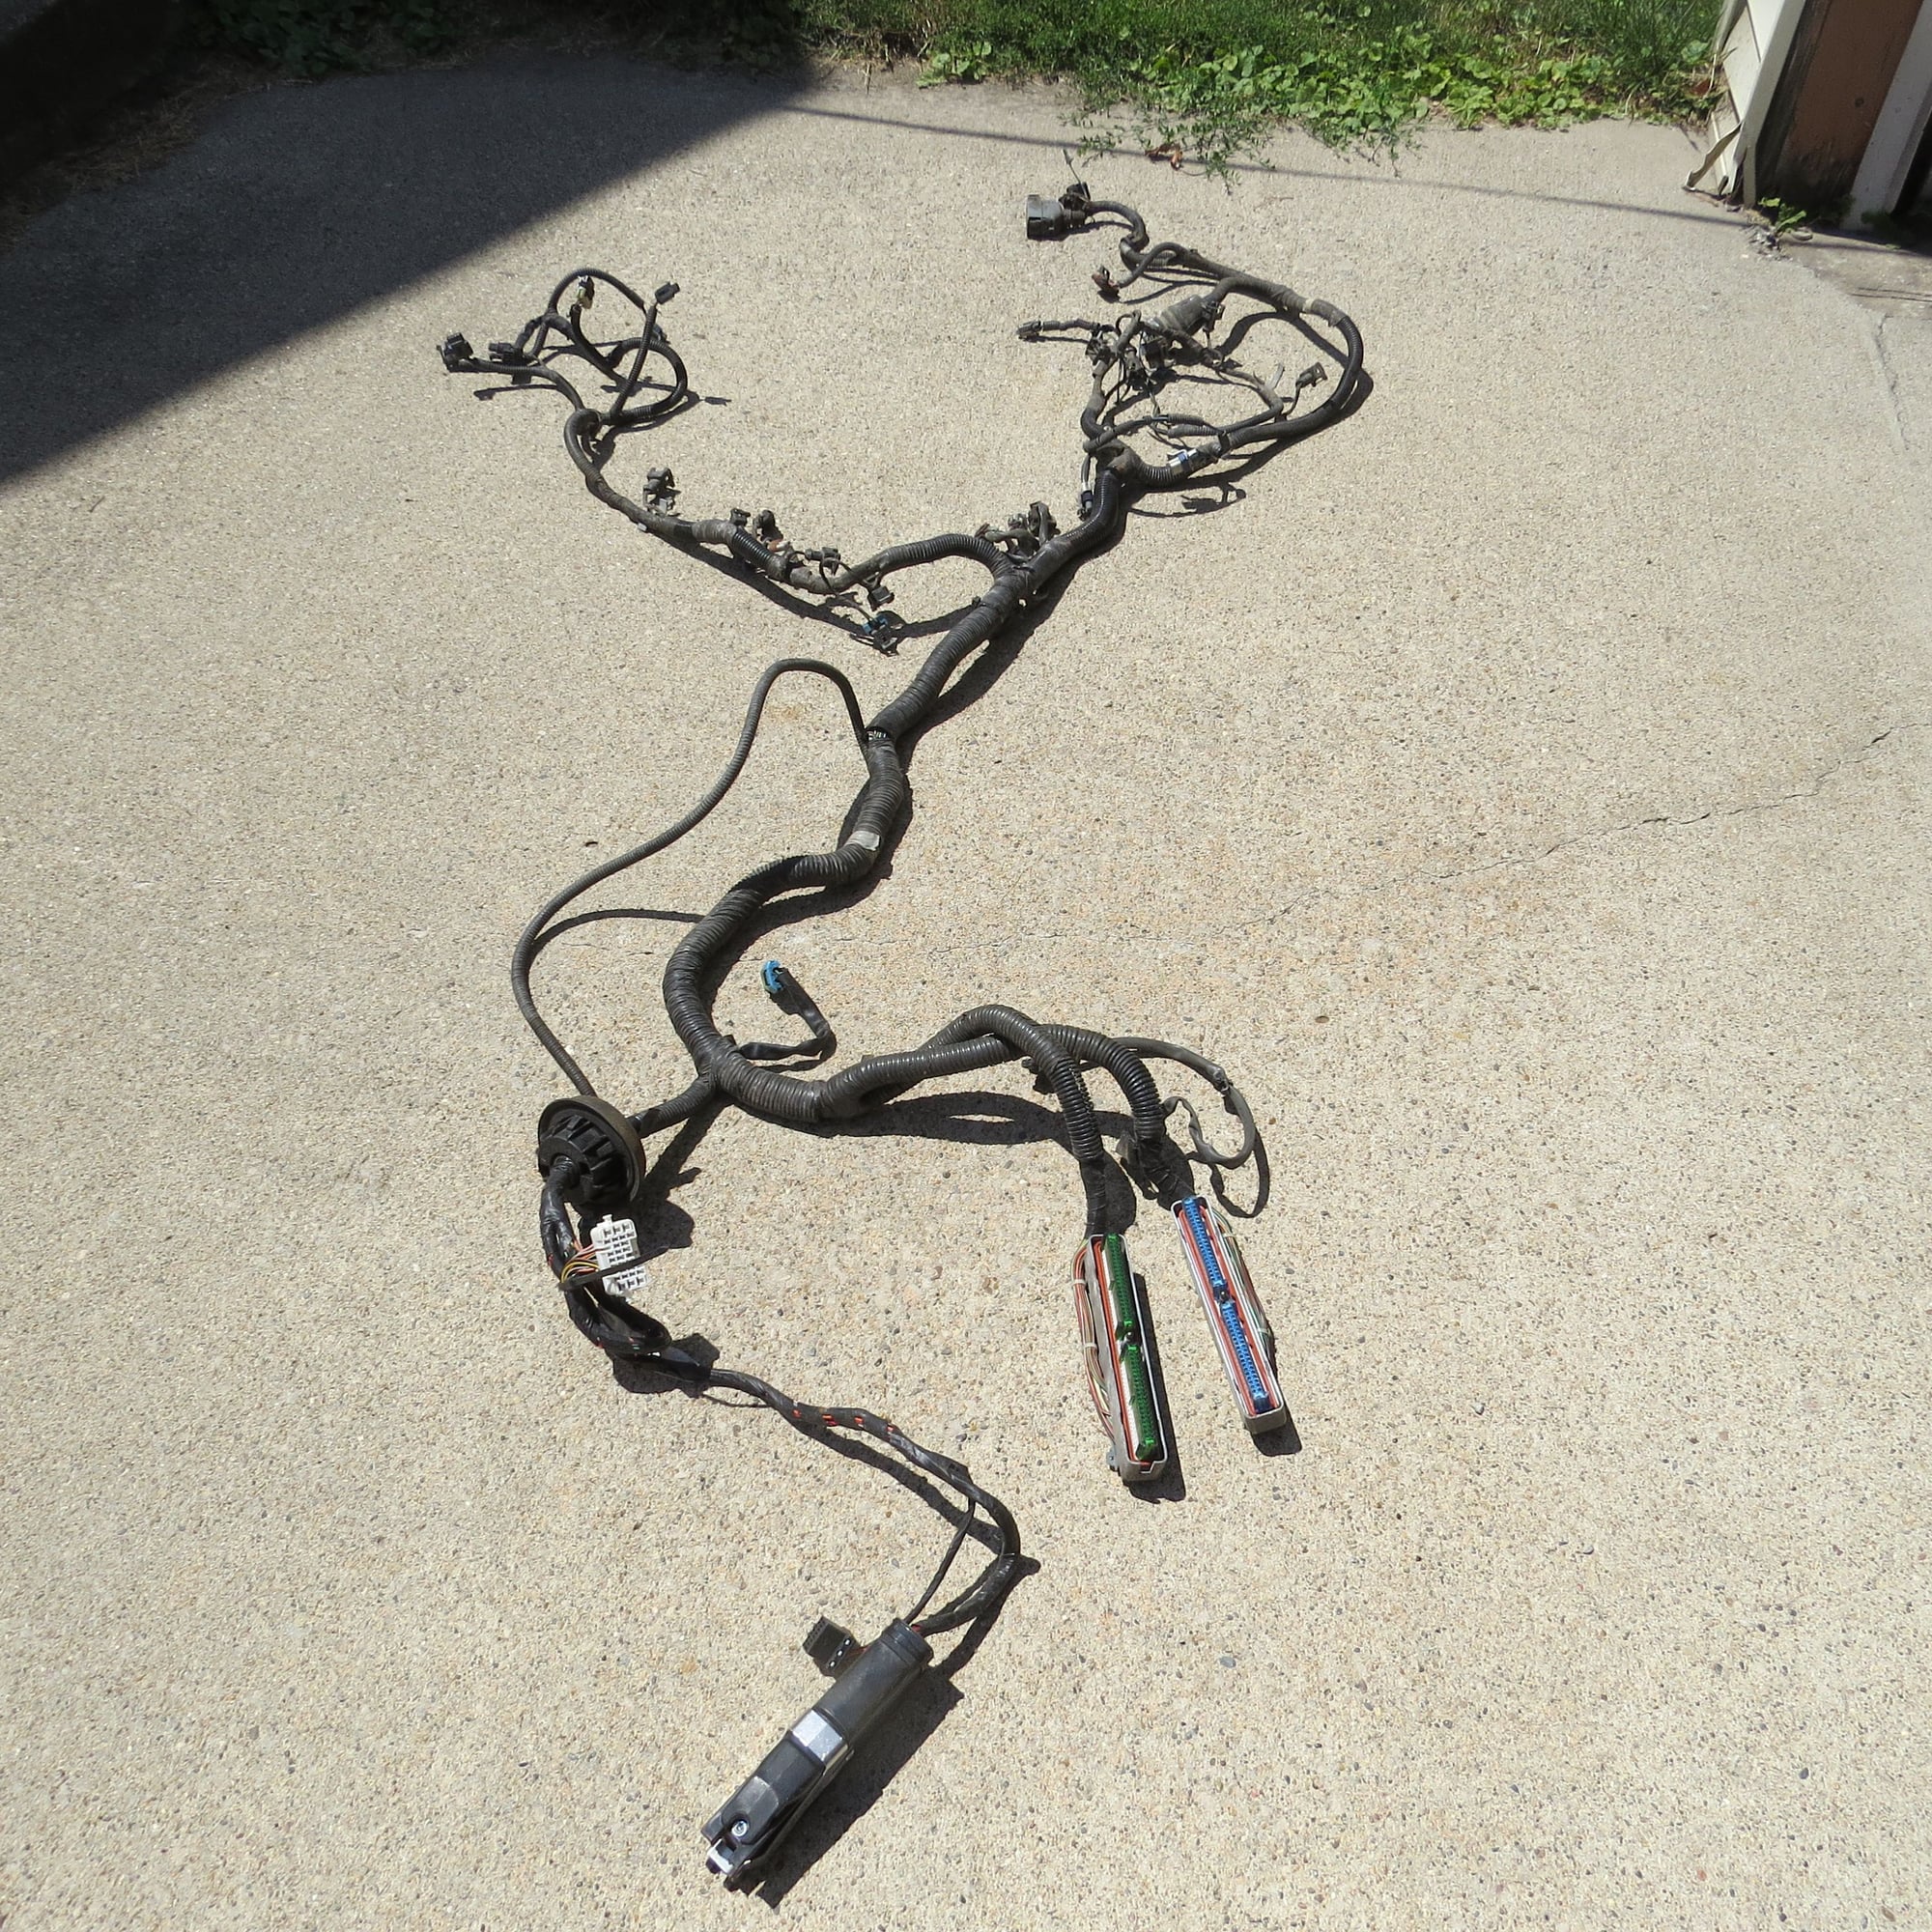  - Wiring harness from 2004 Pontiac GTO - Oskaloosa, IA 52577, United States